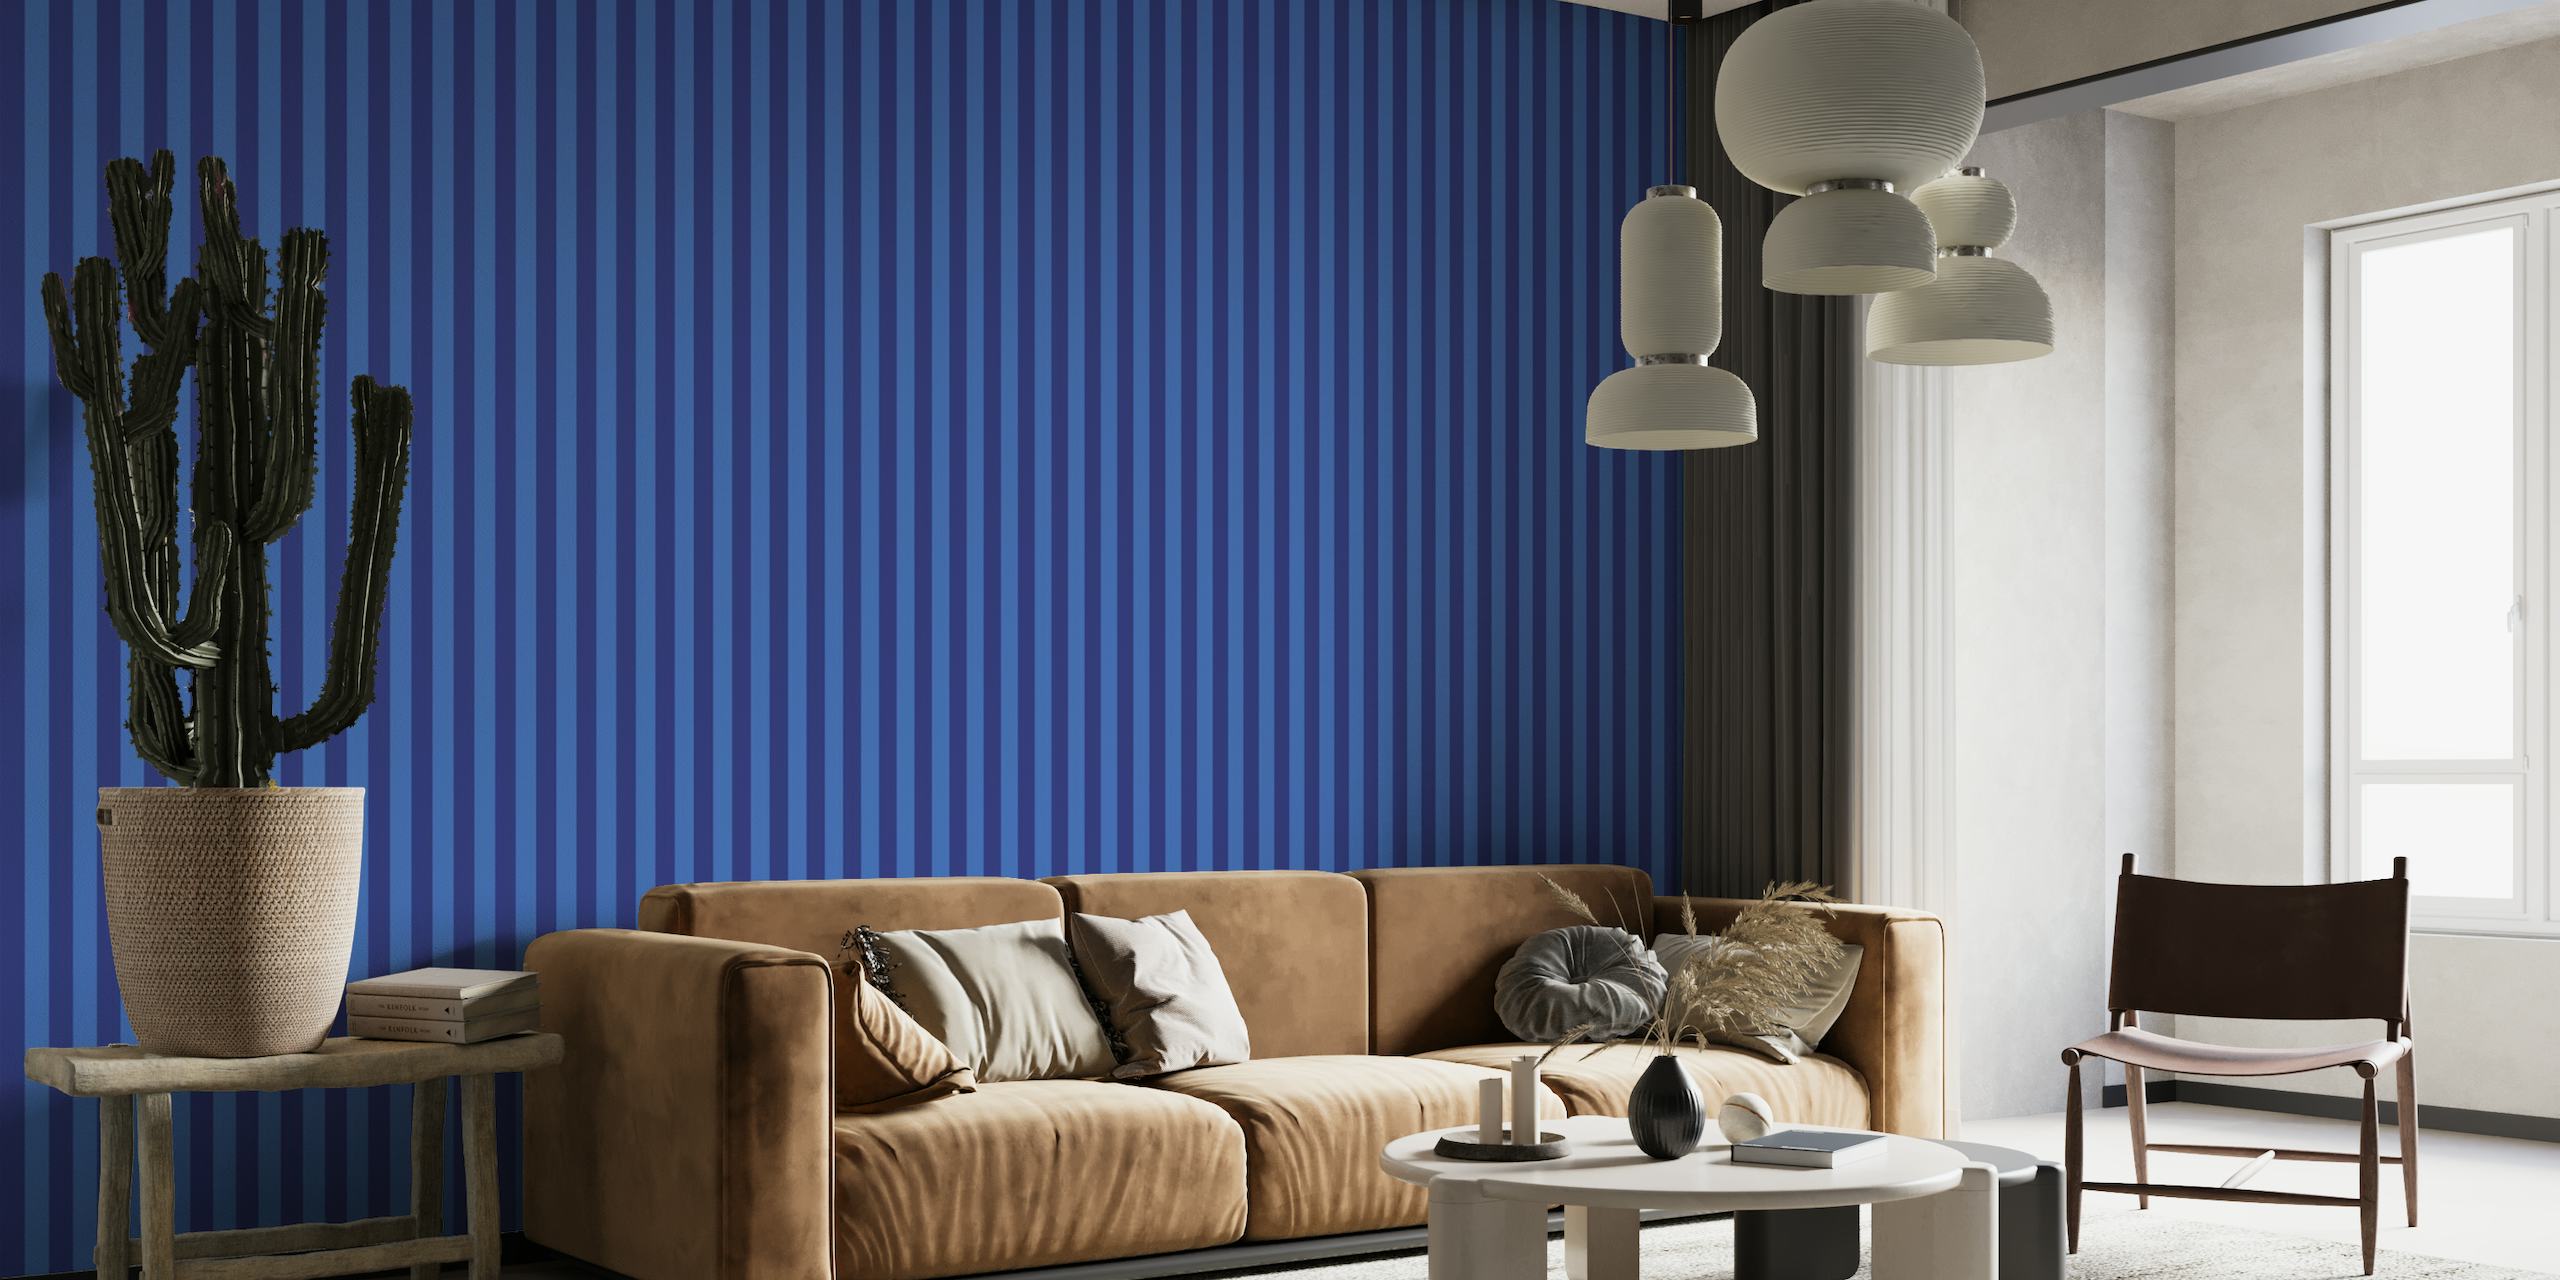 Cobalt and Navy blue stripes wallpaper